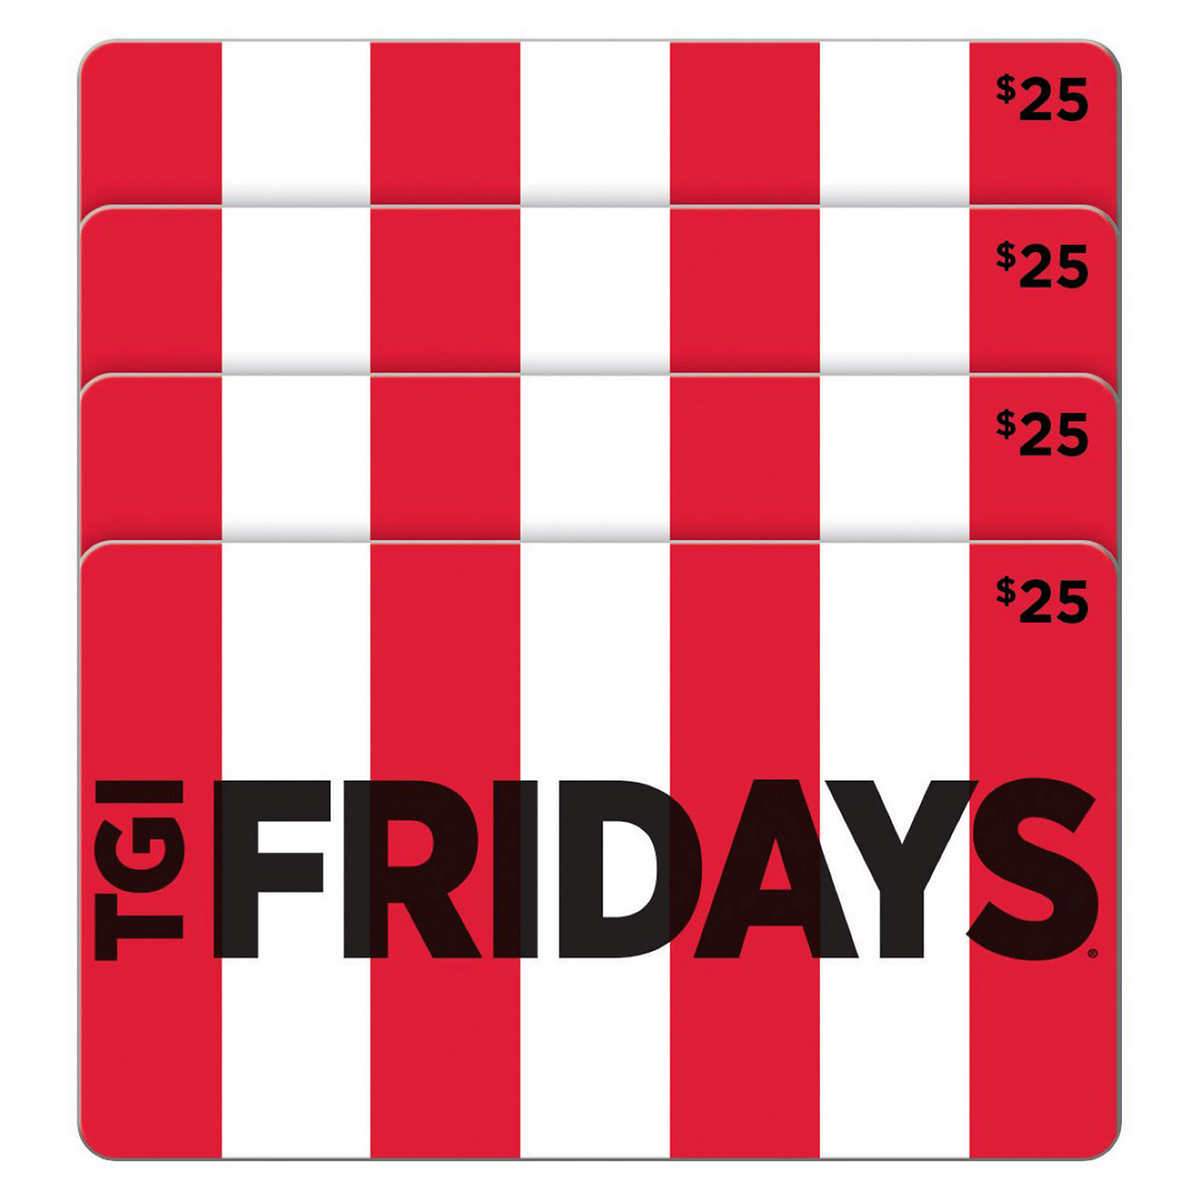 TGI Friday's Four Restaurant $25 E-Gift Cards ($100 Value) | Costco